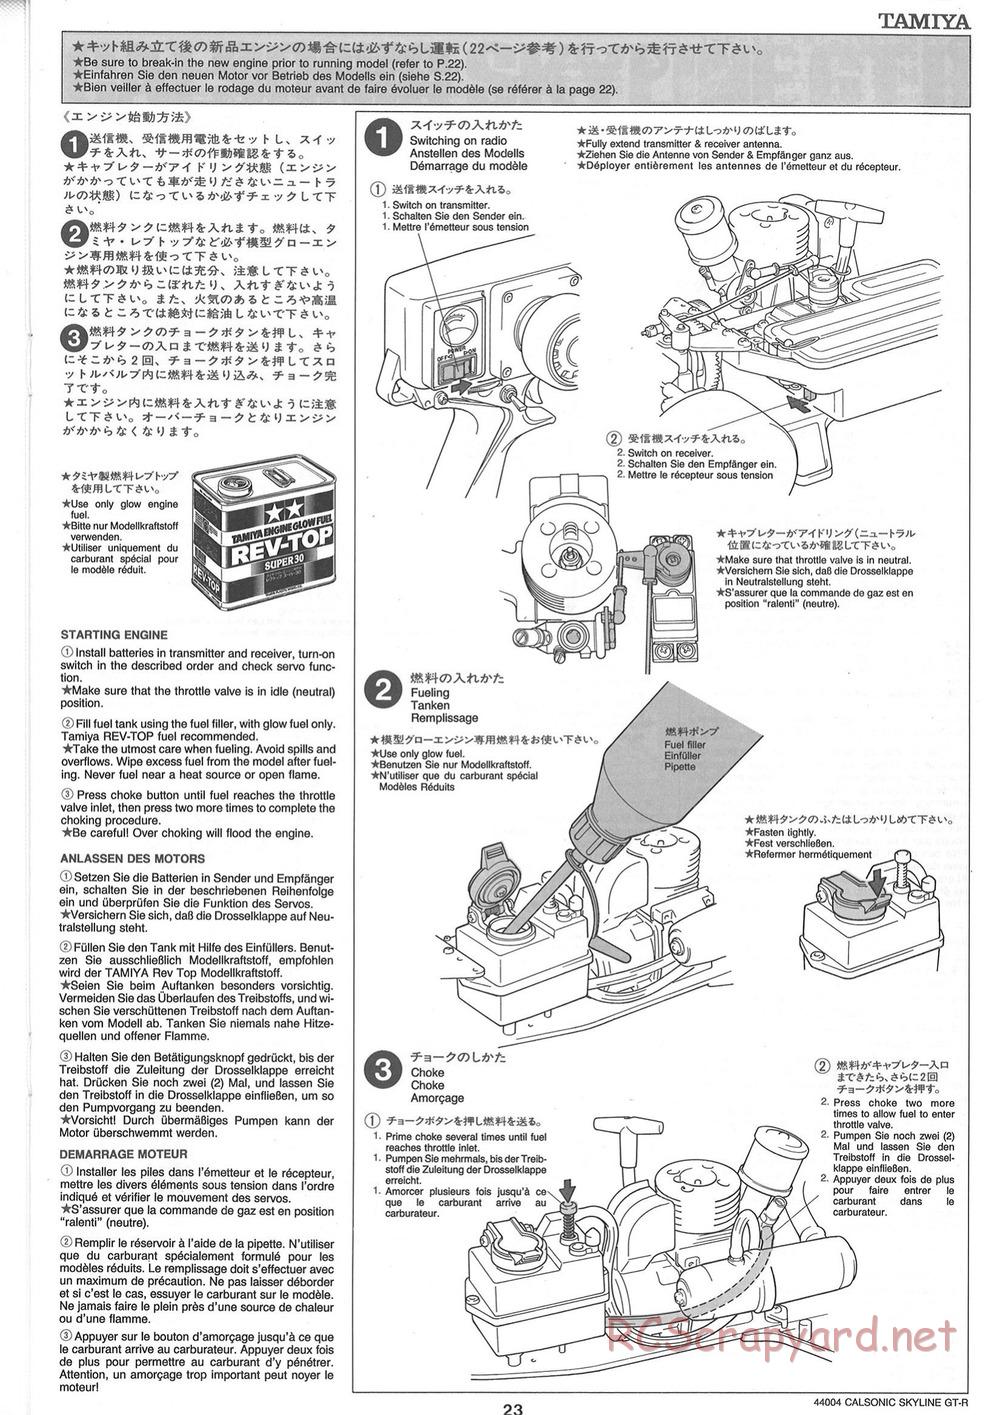 Tamiya - Calsonic GT-R - TGX Mk.1 Chassis - Manual - Page 23